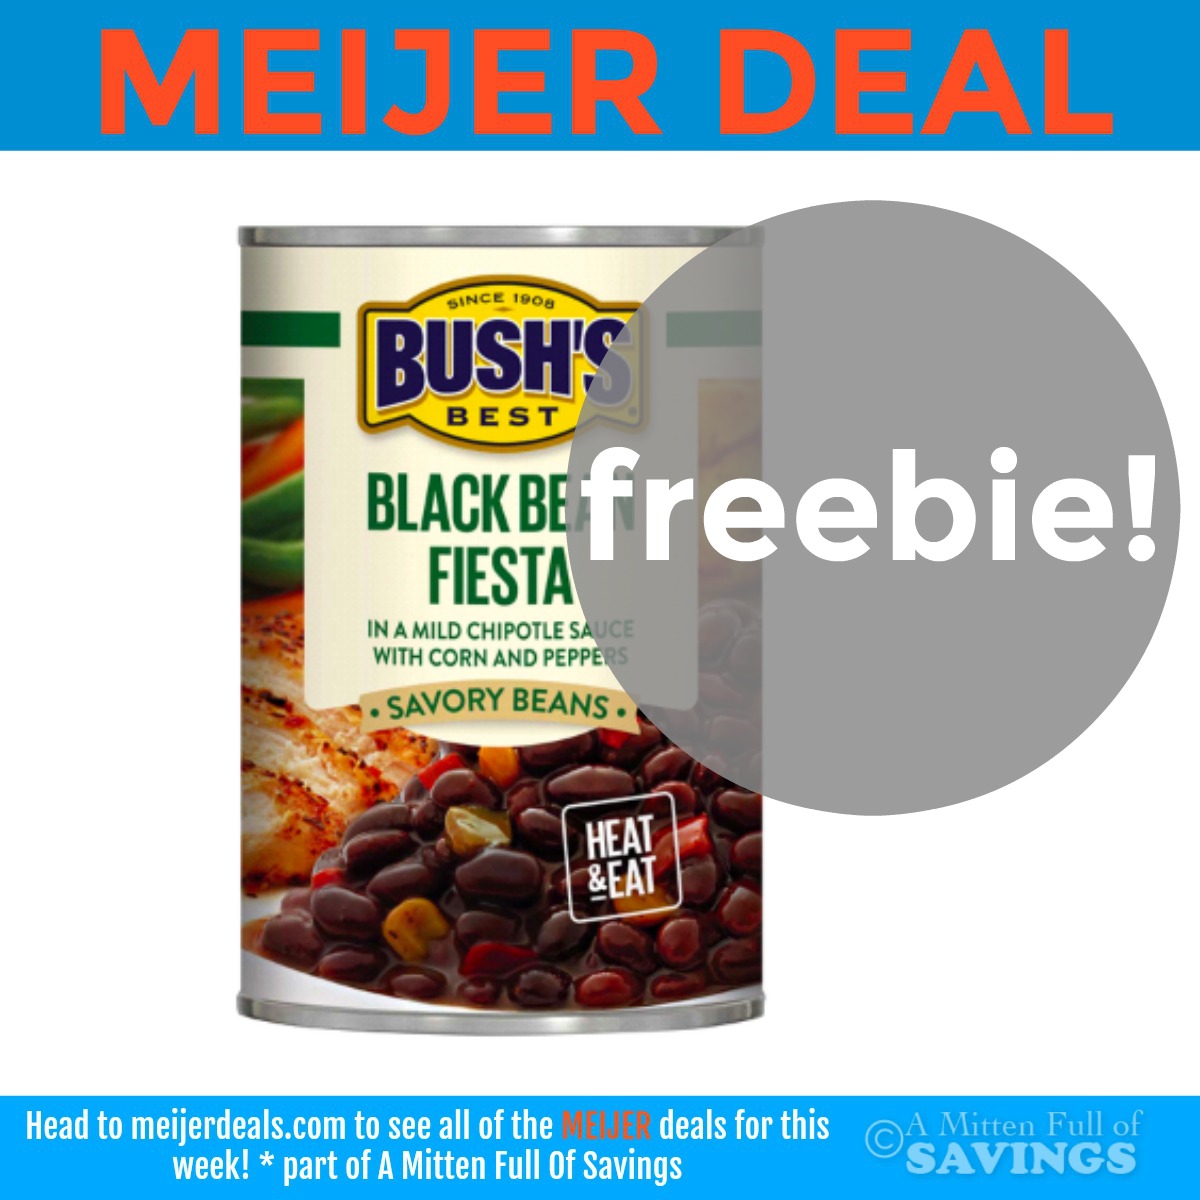 Meijer: Grab Bush's Savory Beans for FREE this week!